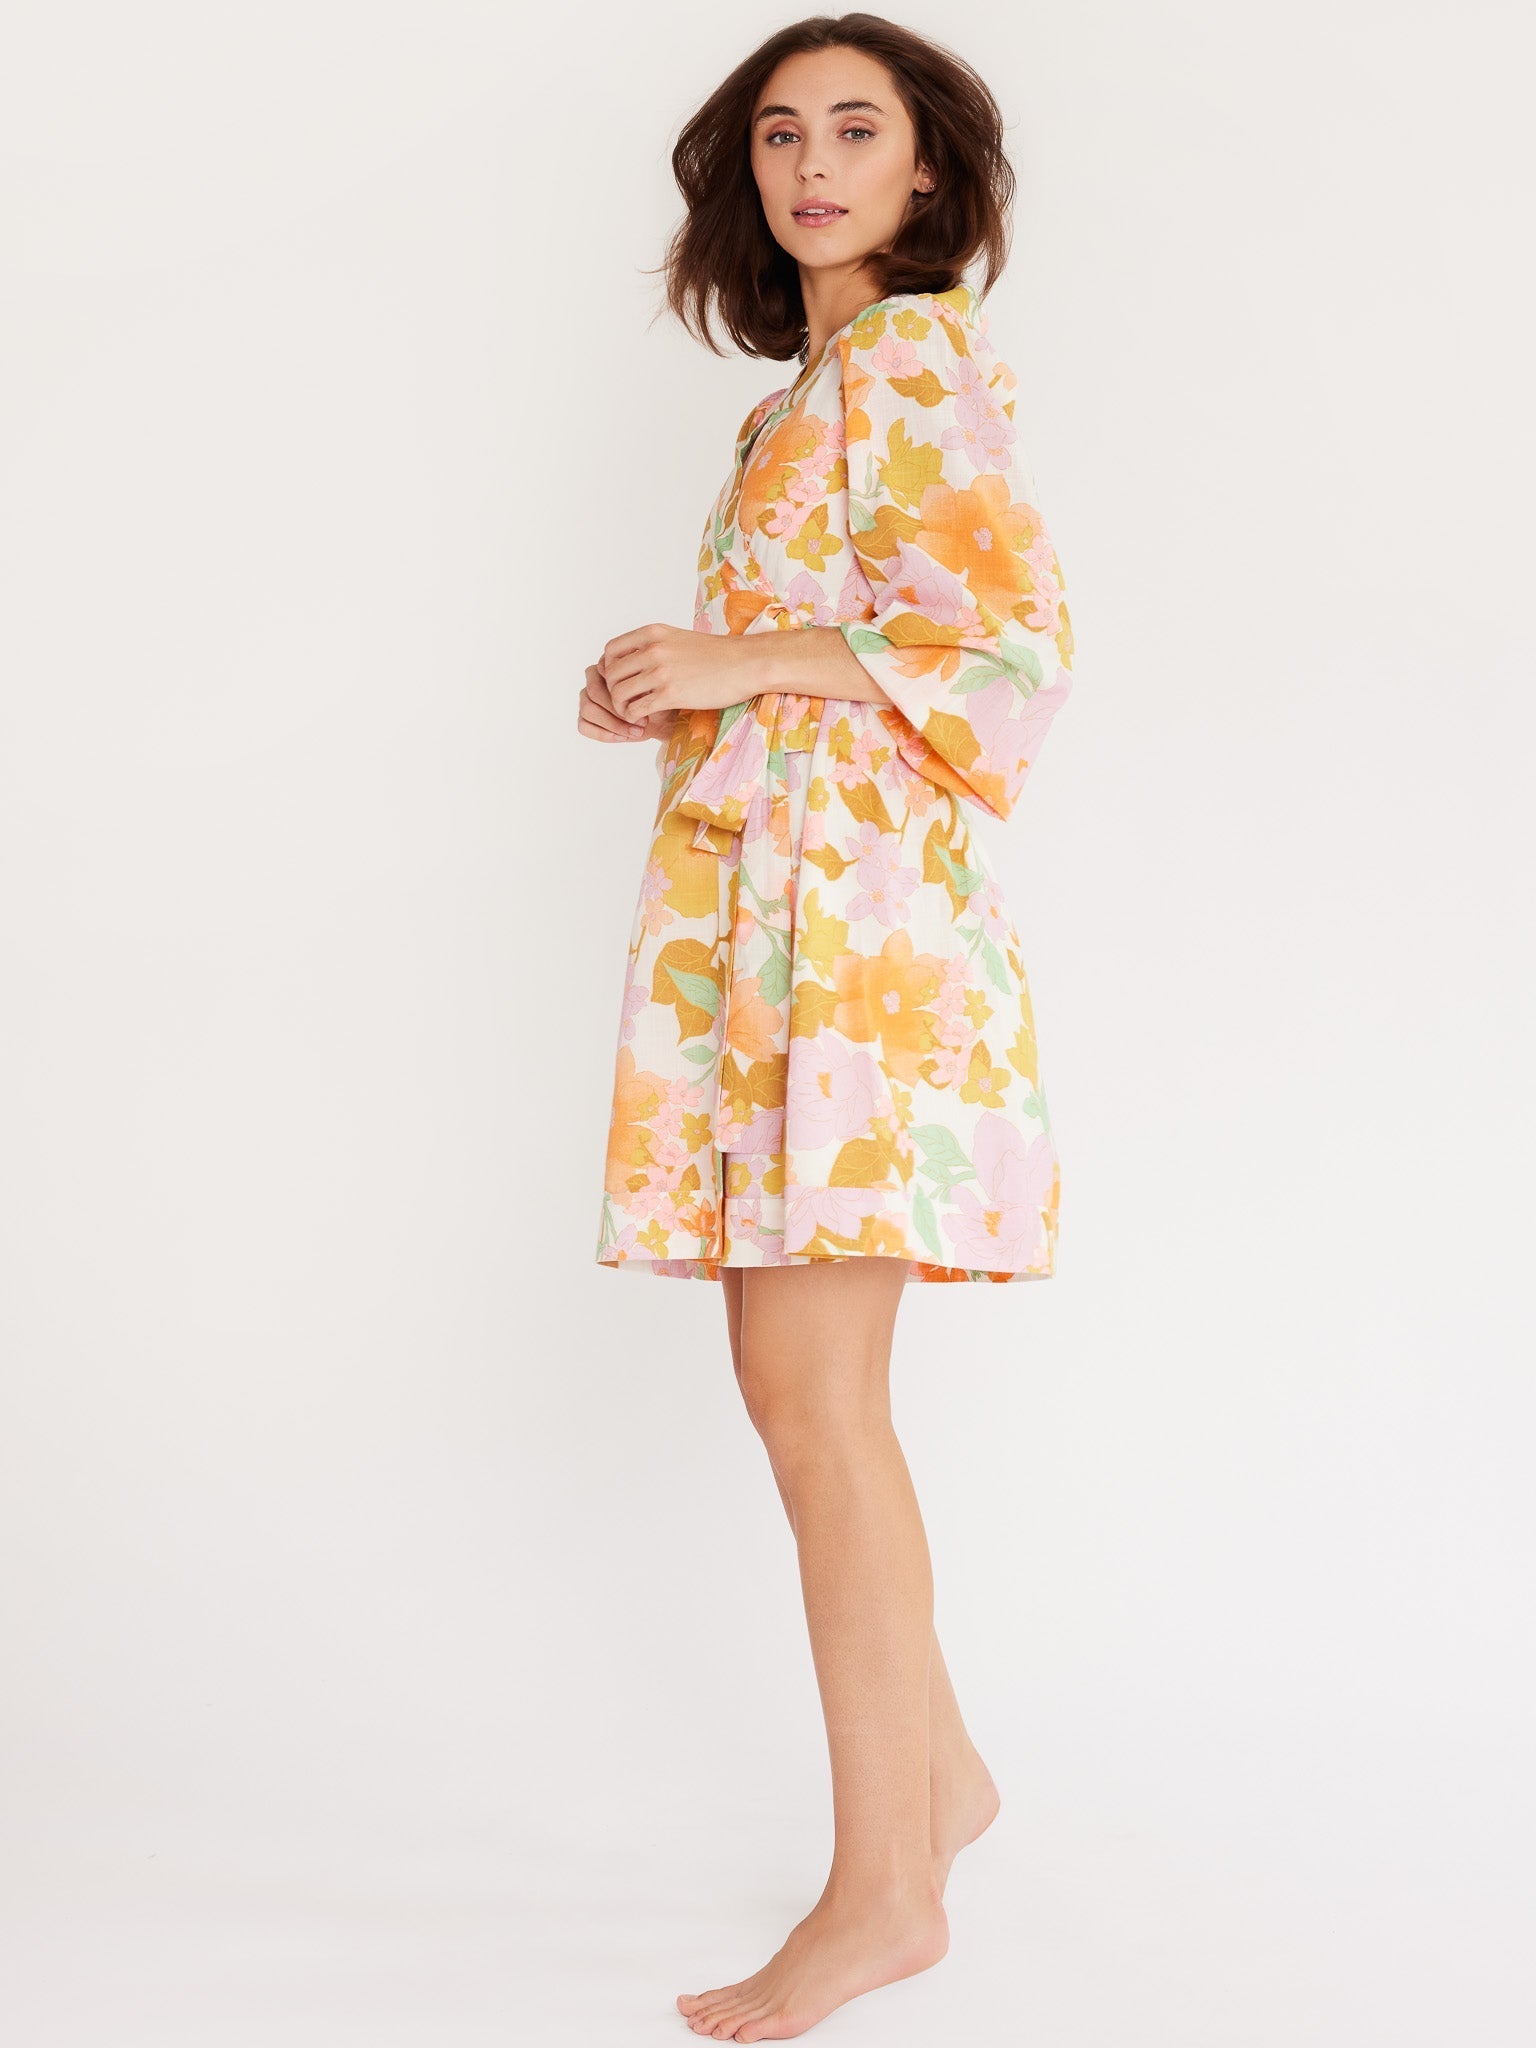 Mille | Women's | Nan Wrap Dress in Retro Floral S